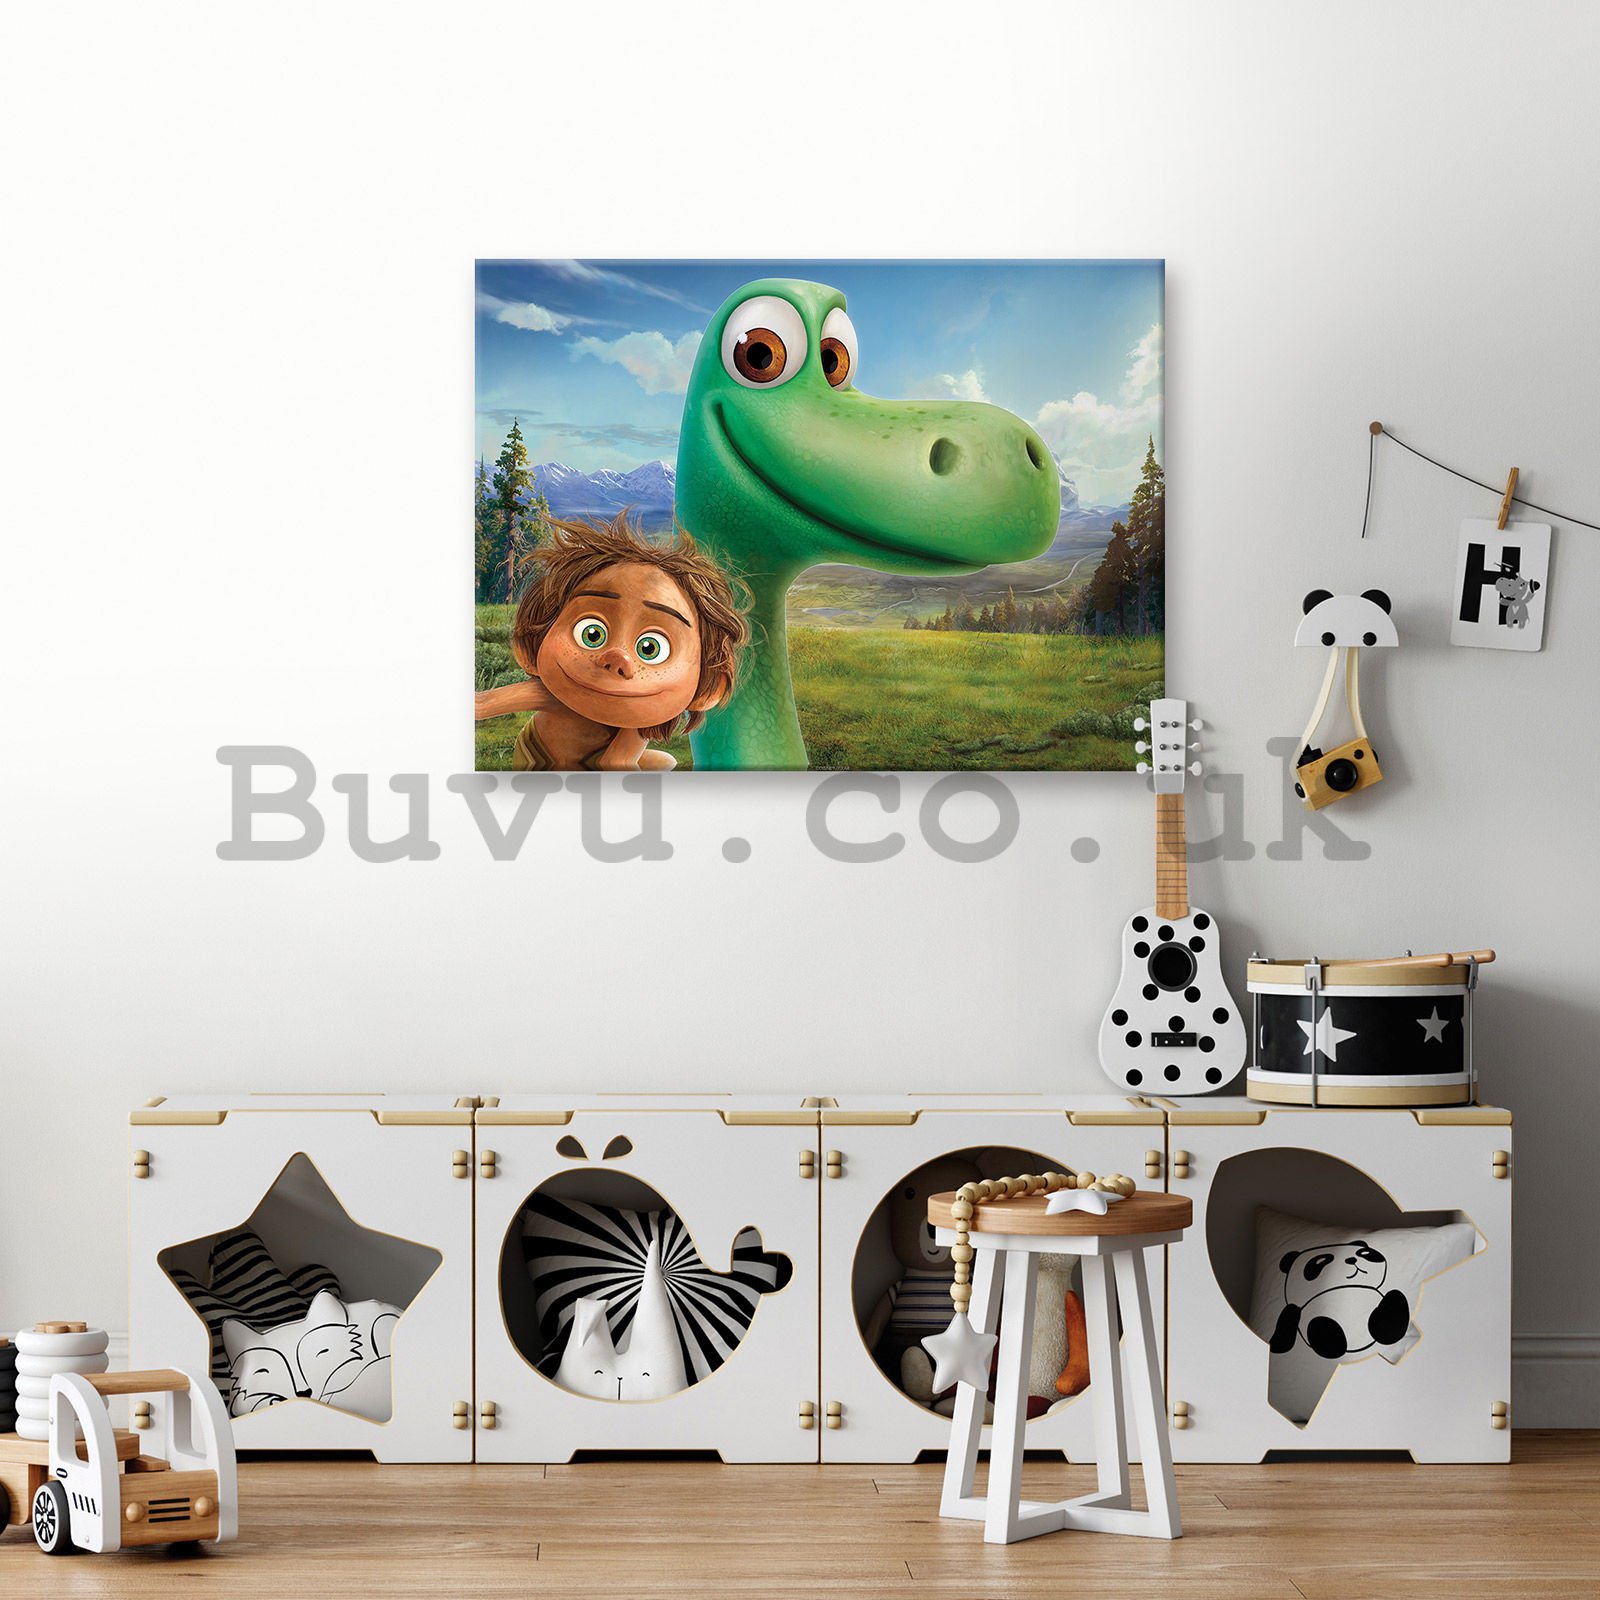 Painting on canvas: The Good Dinosaur (Spot & Arlo) - 80x60 cm